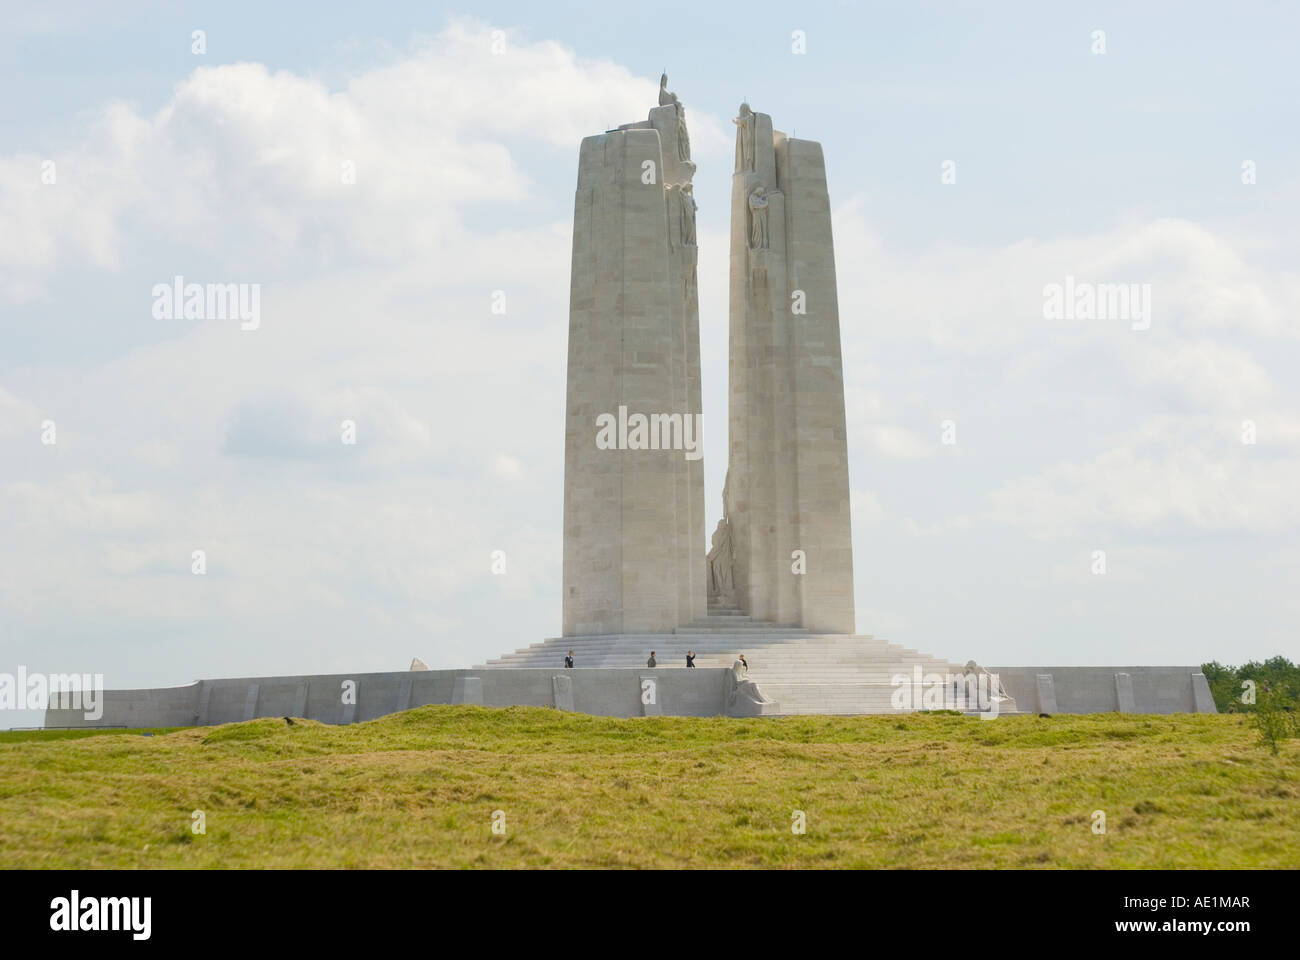 The Canadian memorial on top of Vimy Ridge. Stock Photo